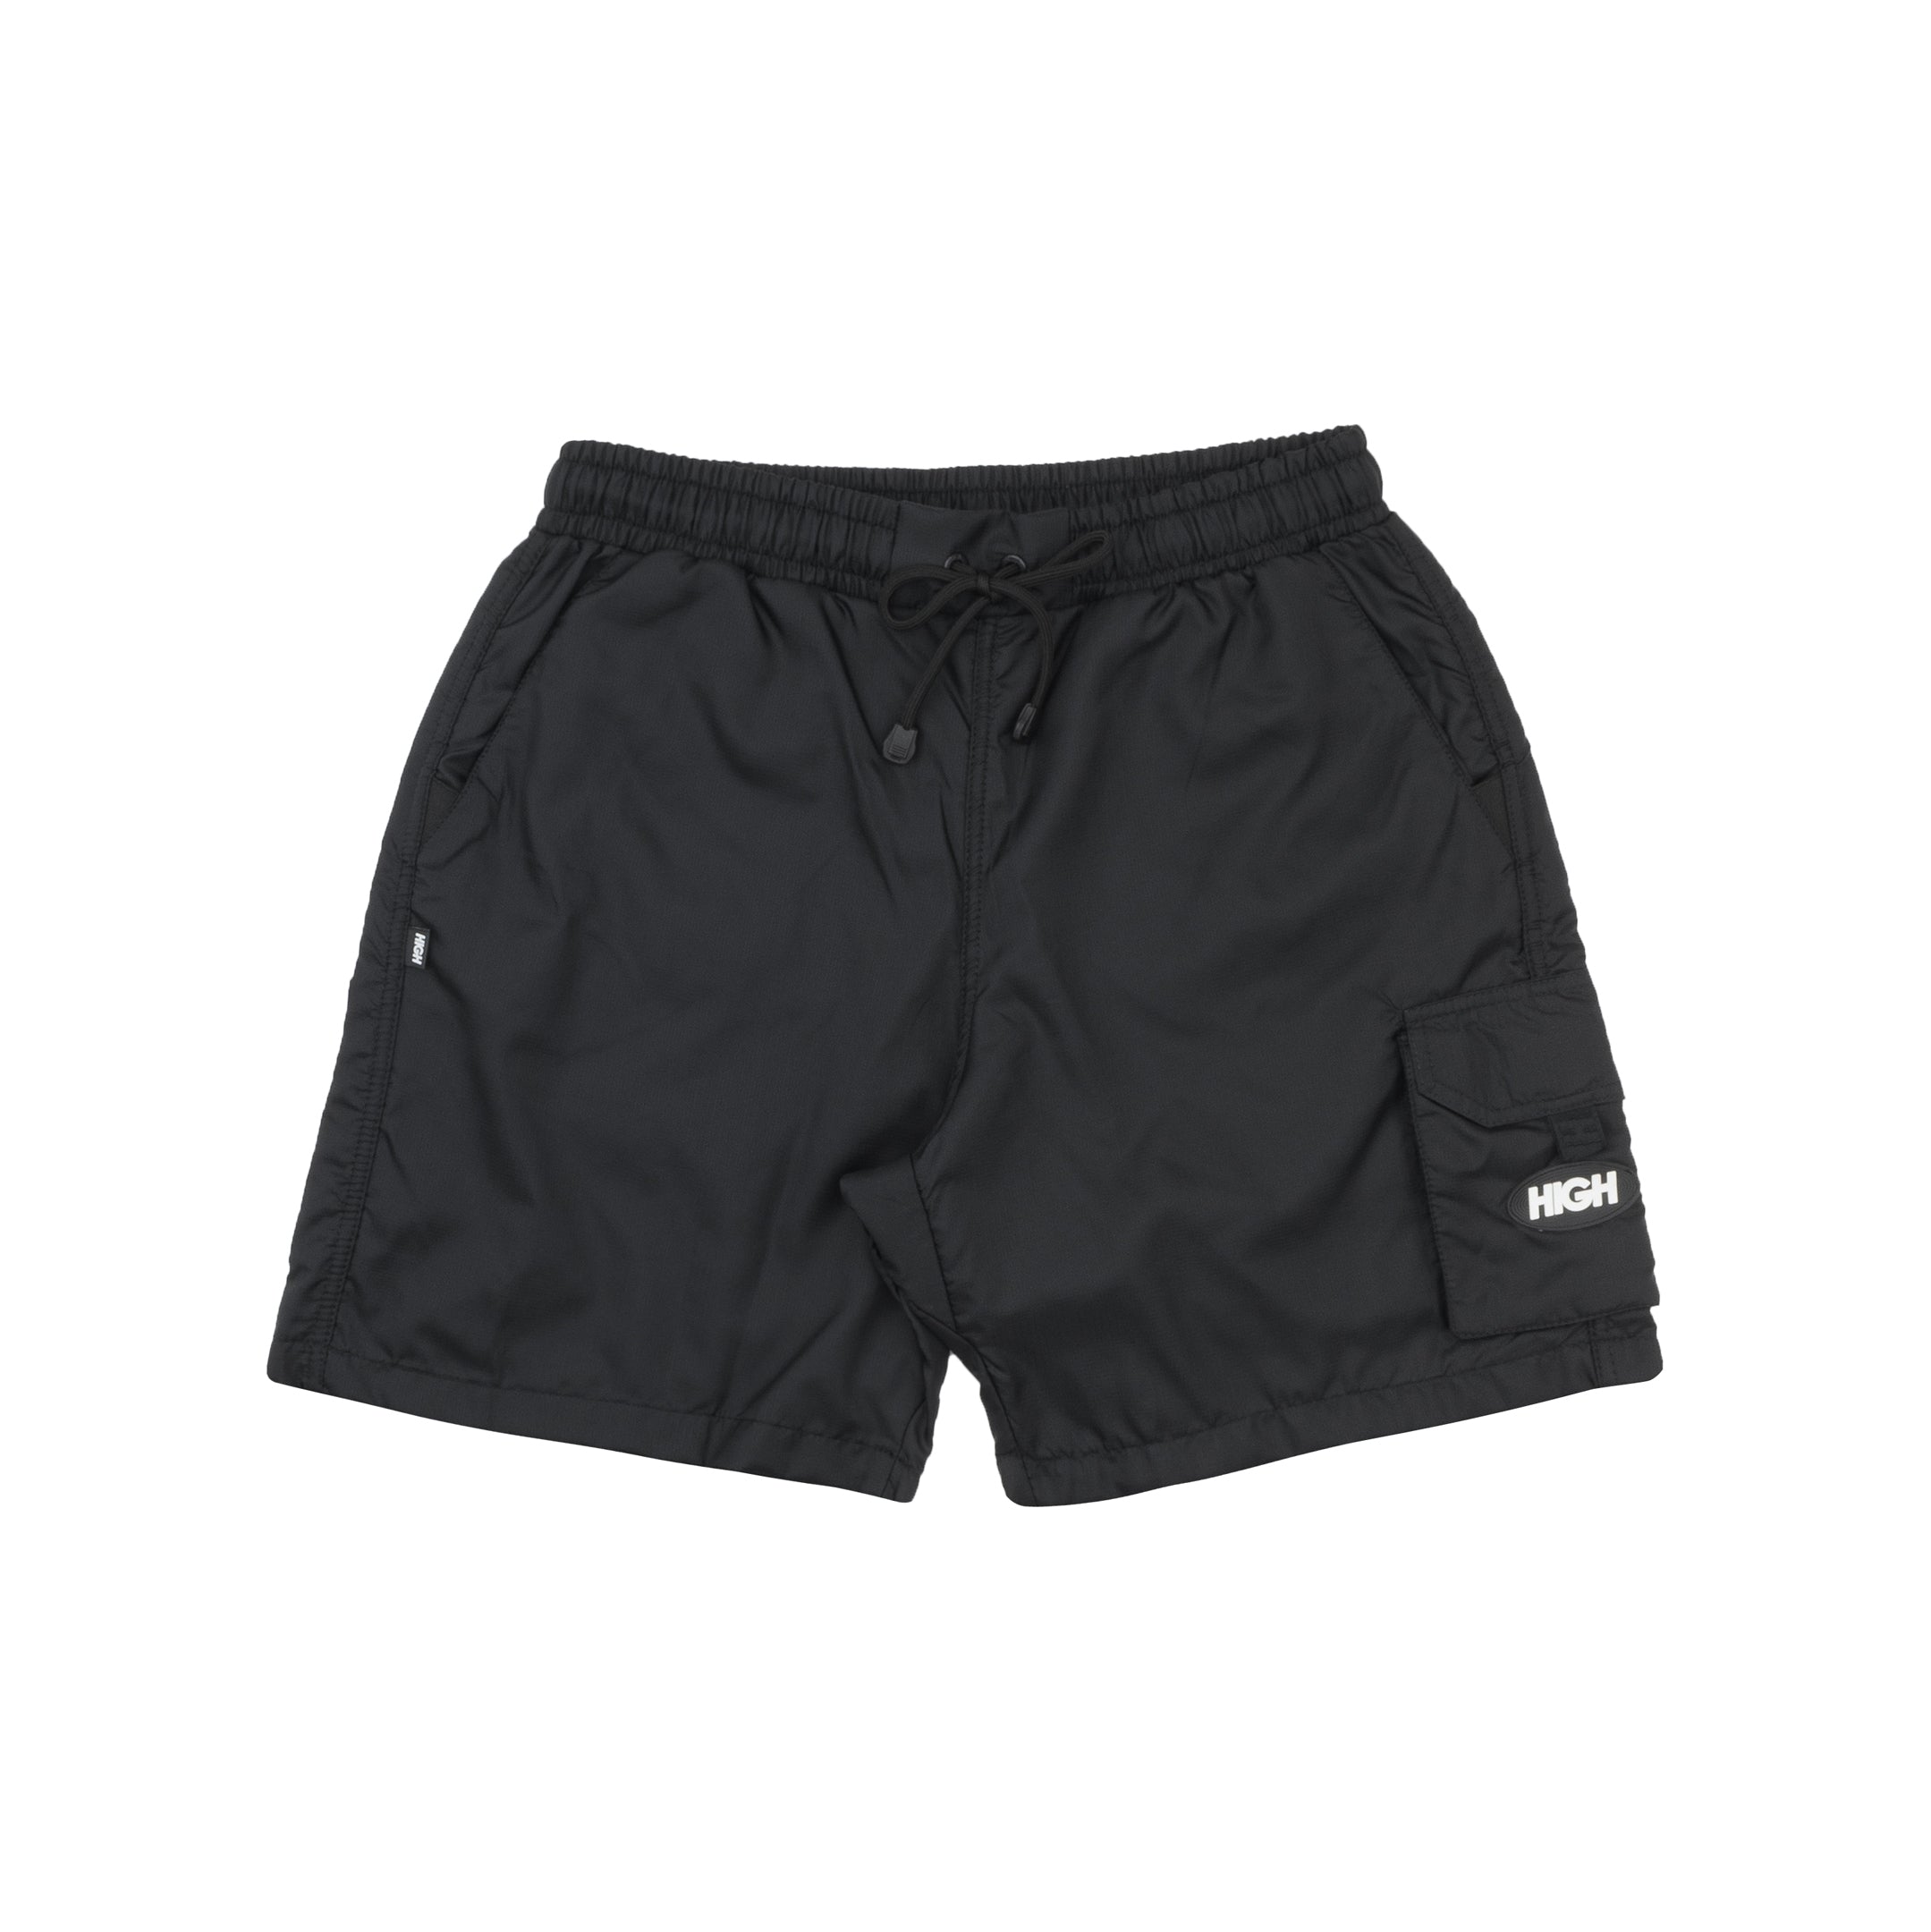 HIGH - Shorts Cargo Oval Ripstop Black